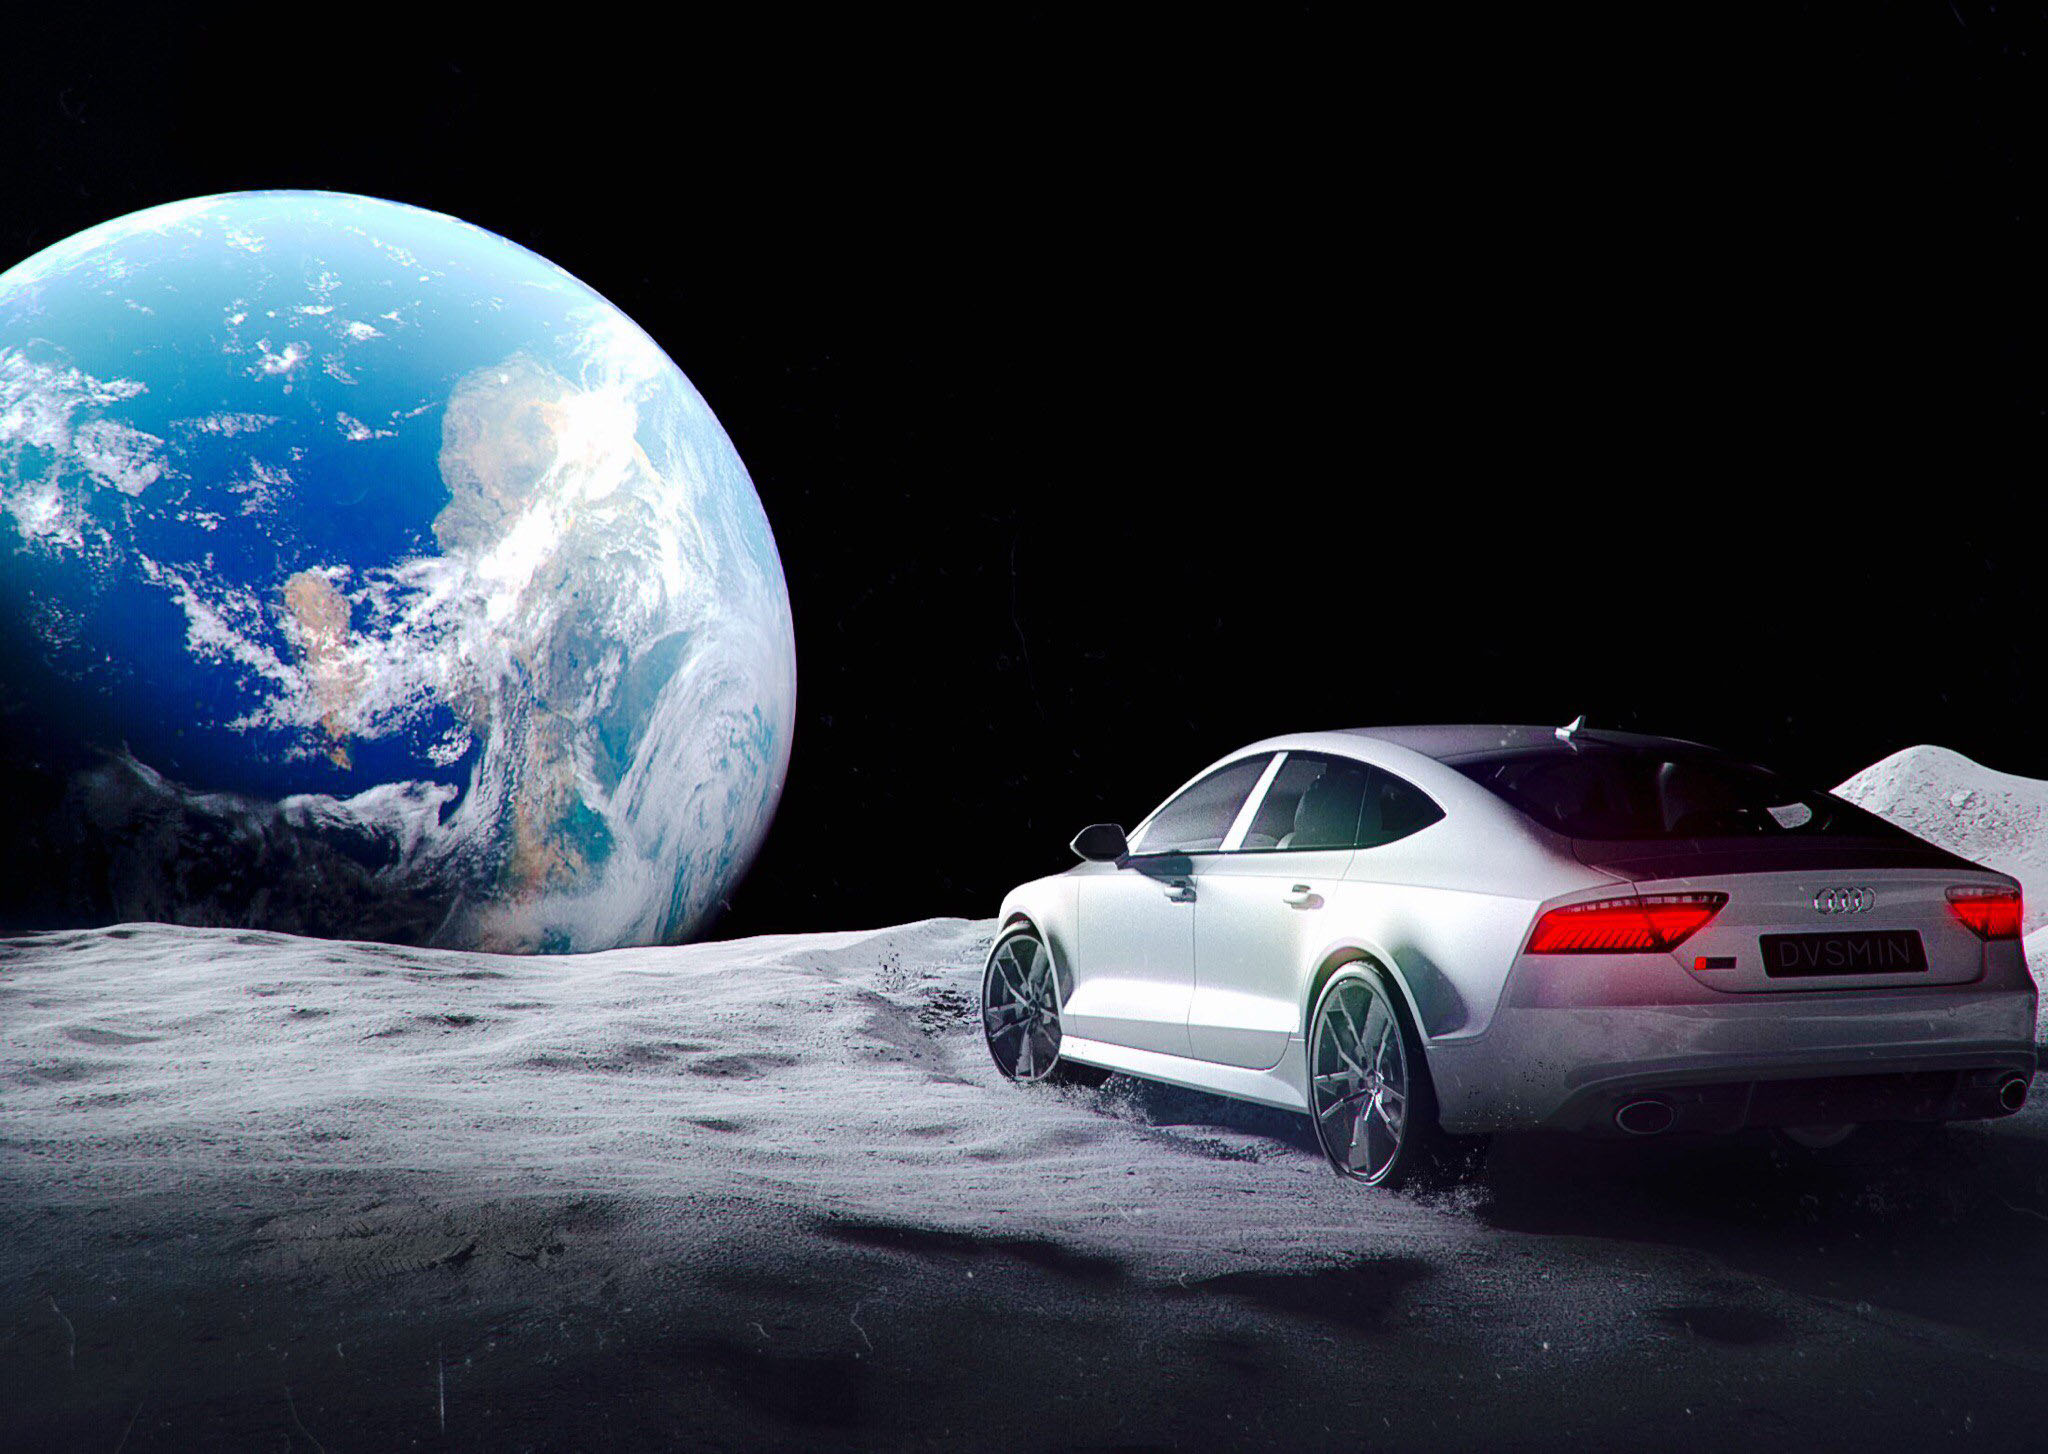 Moon cars. Машина на Луне. Машина на фоне планеты. Автомобиль в космосе. Машина на фоне Луны.